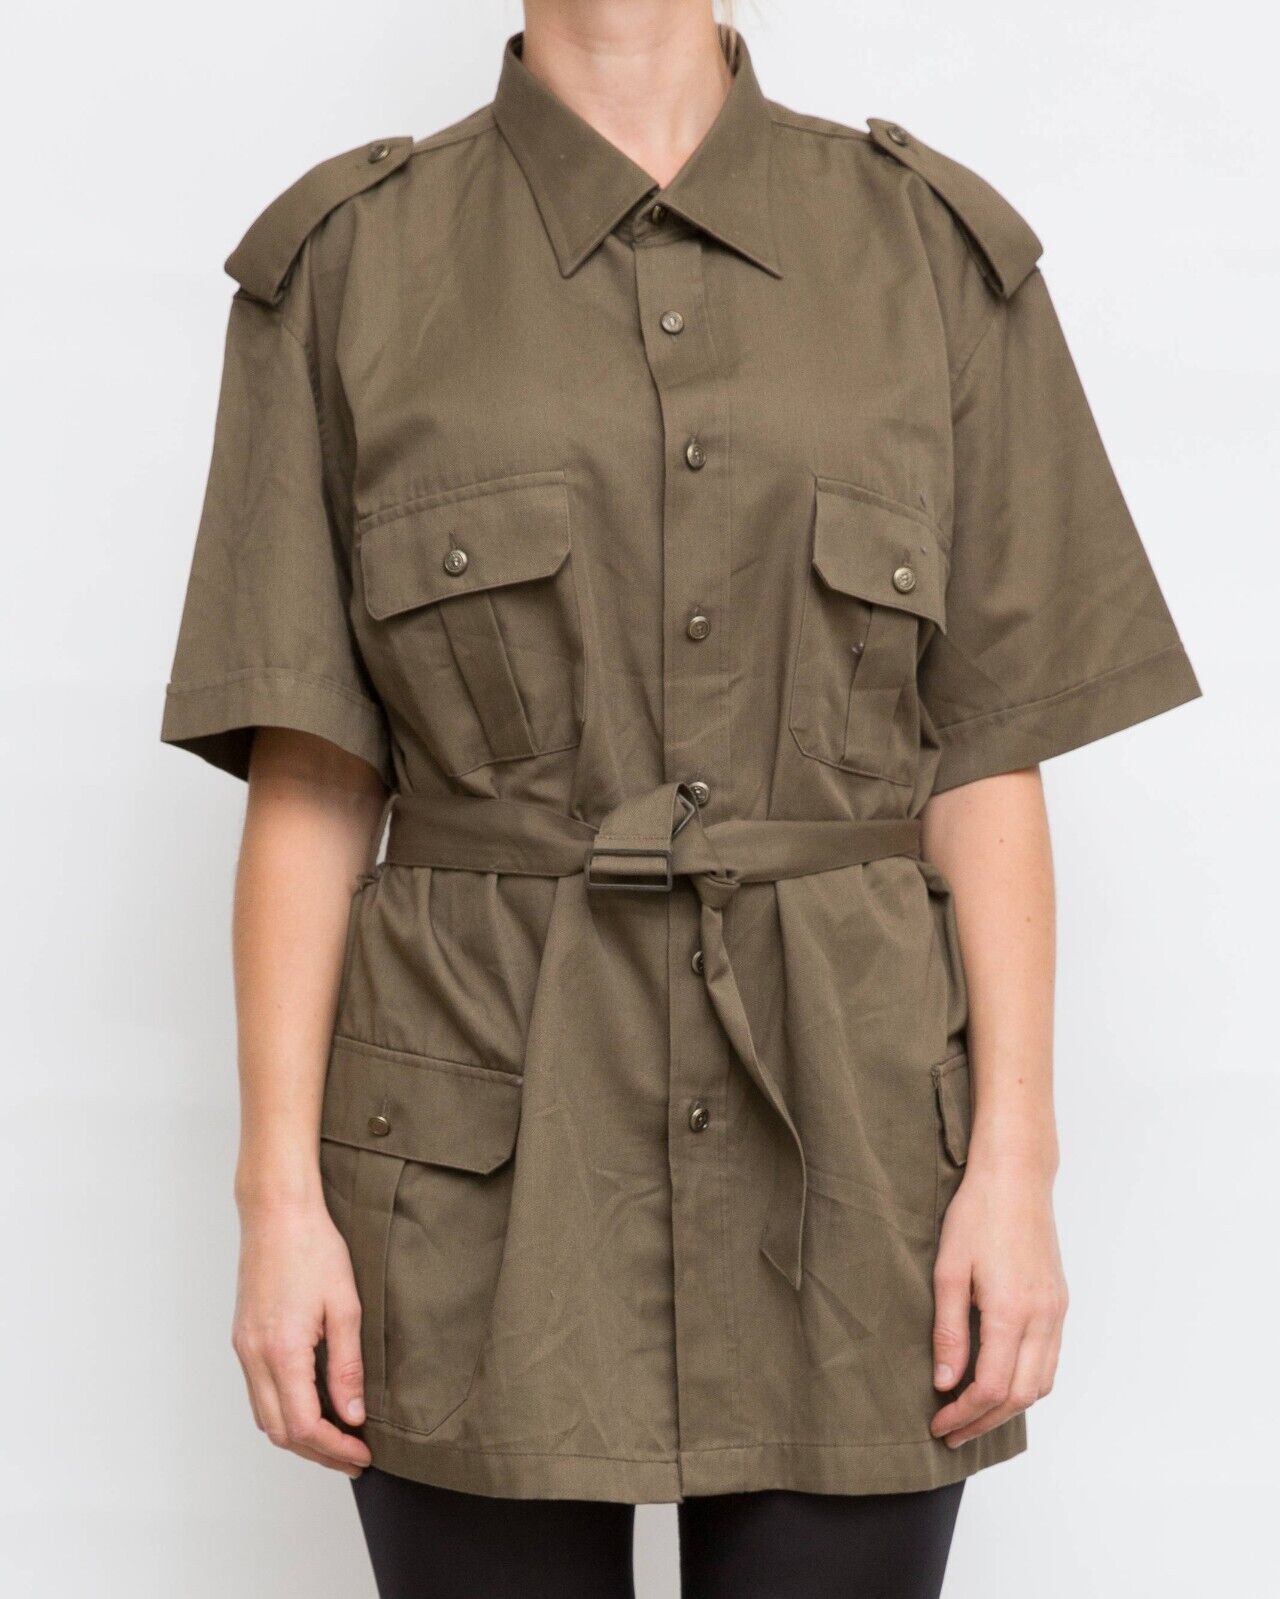 New vintage 1980s Italian army safari shirt blouse khaki military brown belt